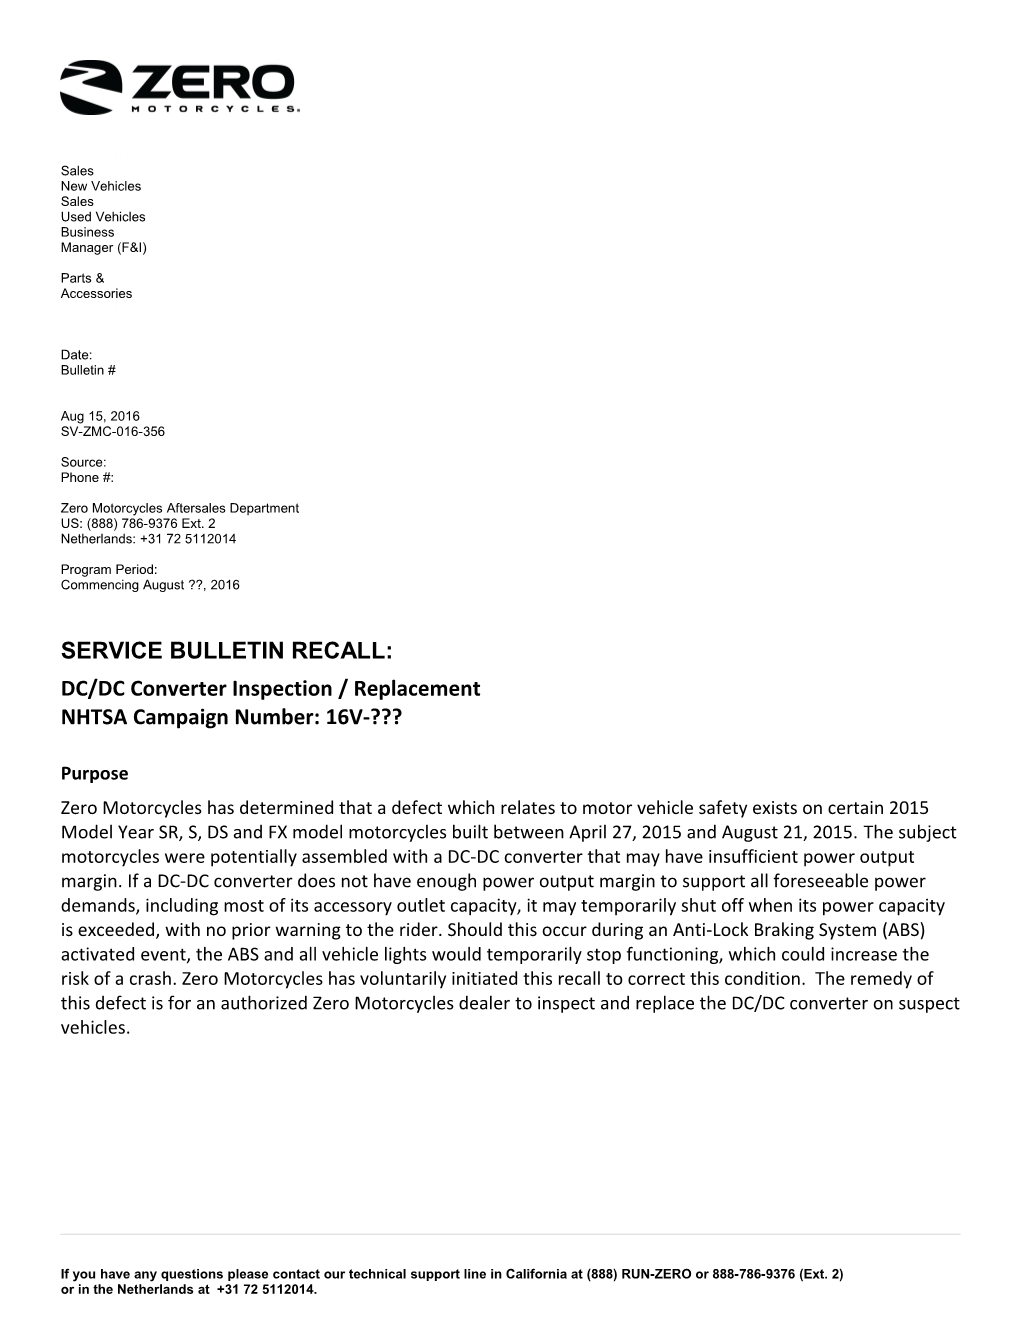 Service Bulletin Recall